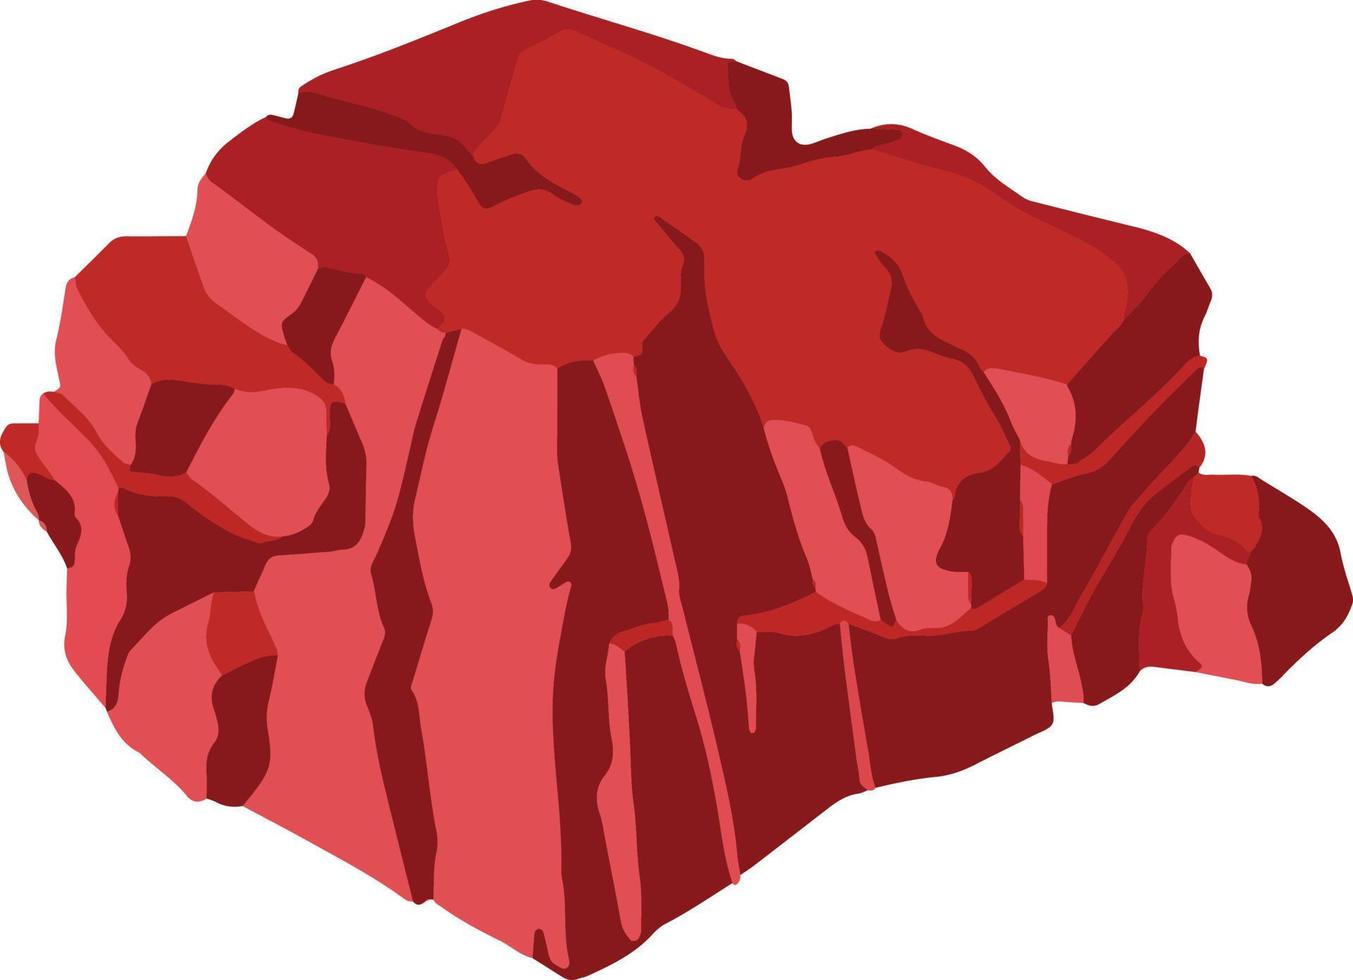 Isometric island volcanic red soil illustration vector